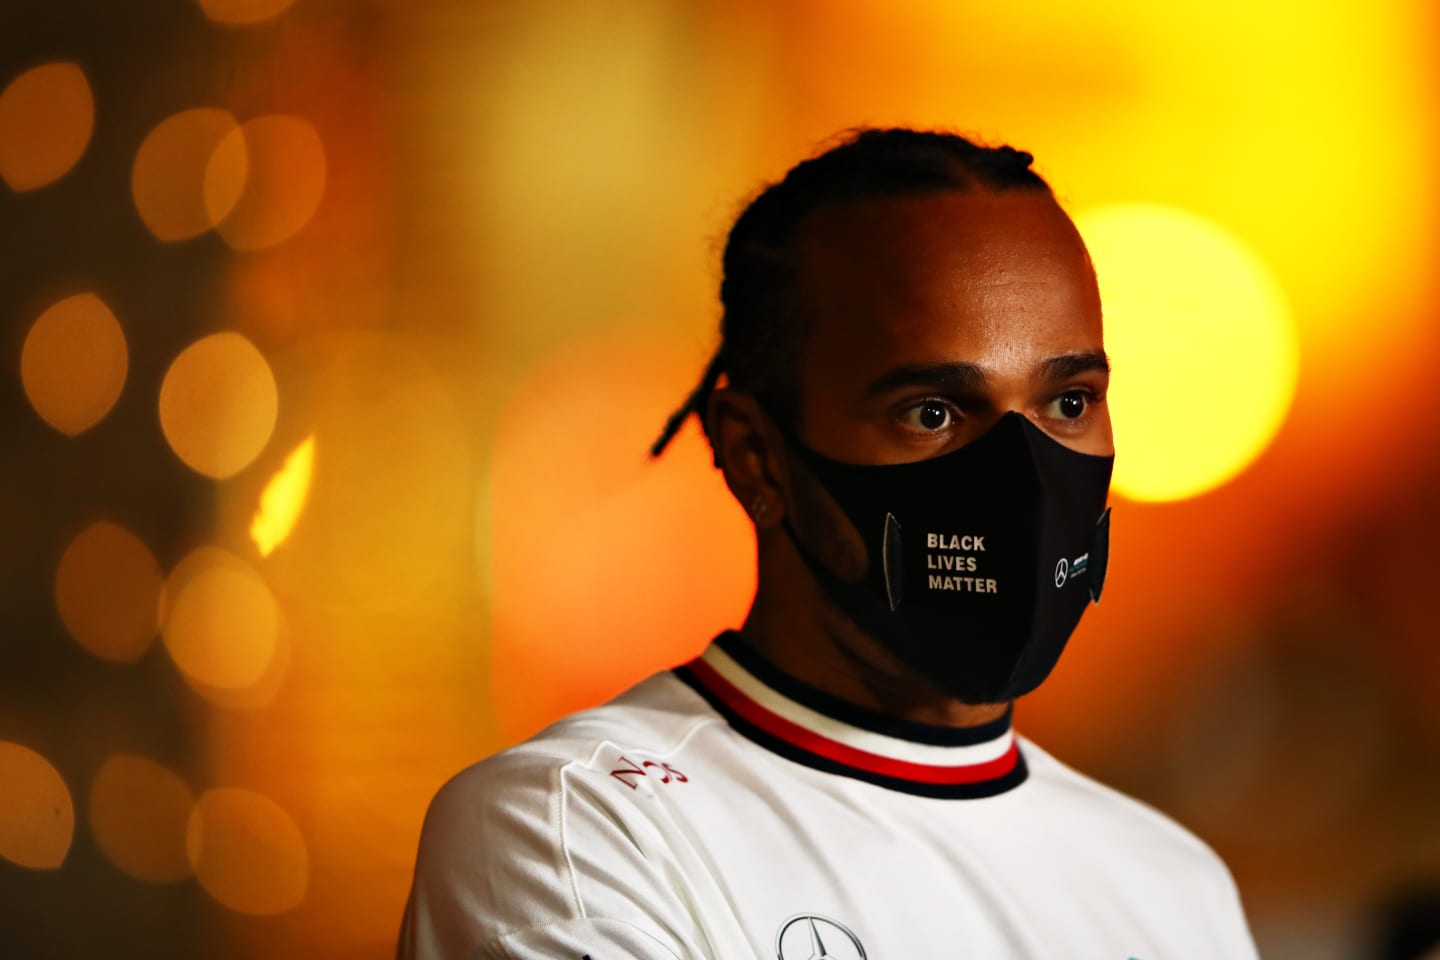 BAHRAIN, BAHRAIN - NOVEMBER 26: Lewis Hamilton of Great Britain and Mercedes GP talks to the media